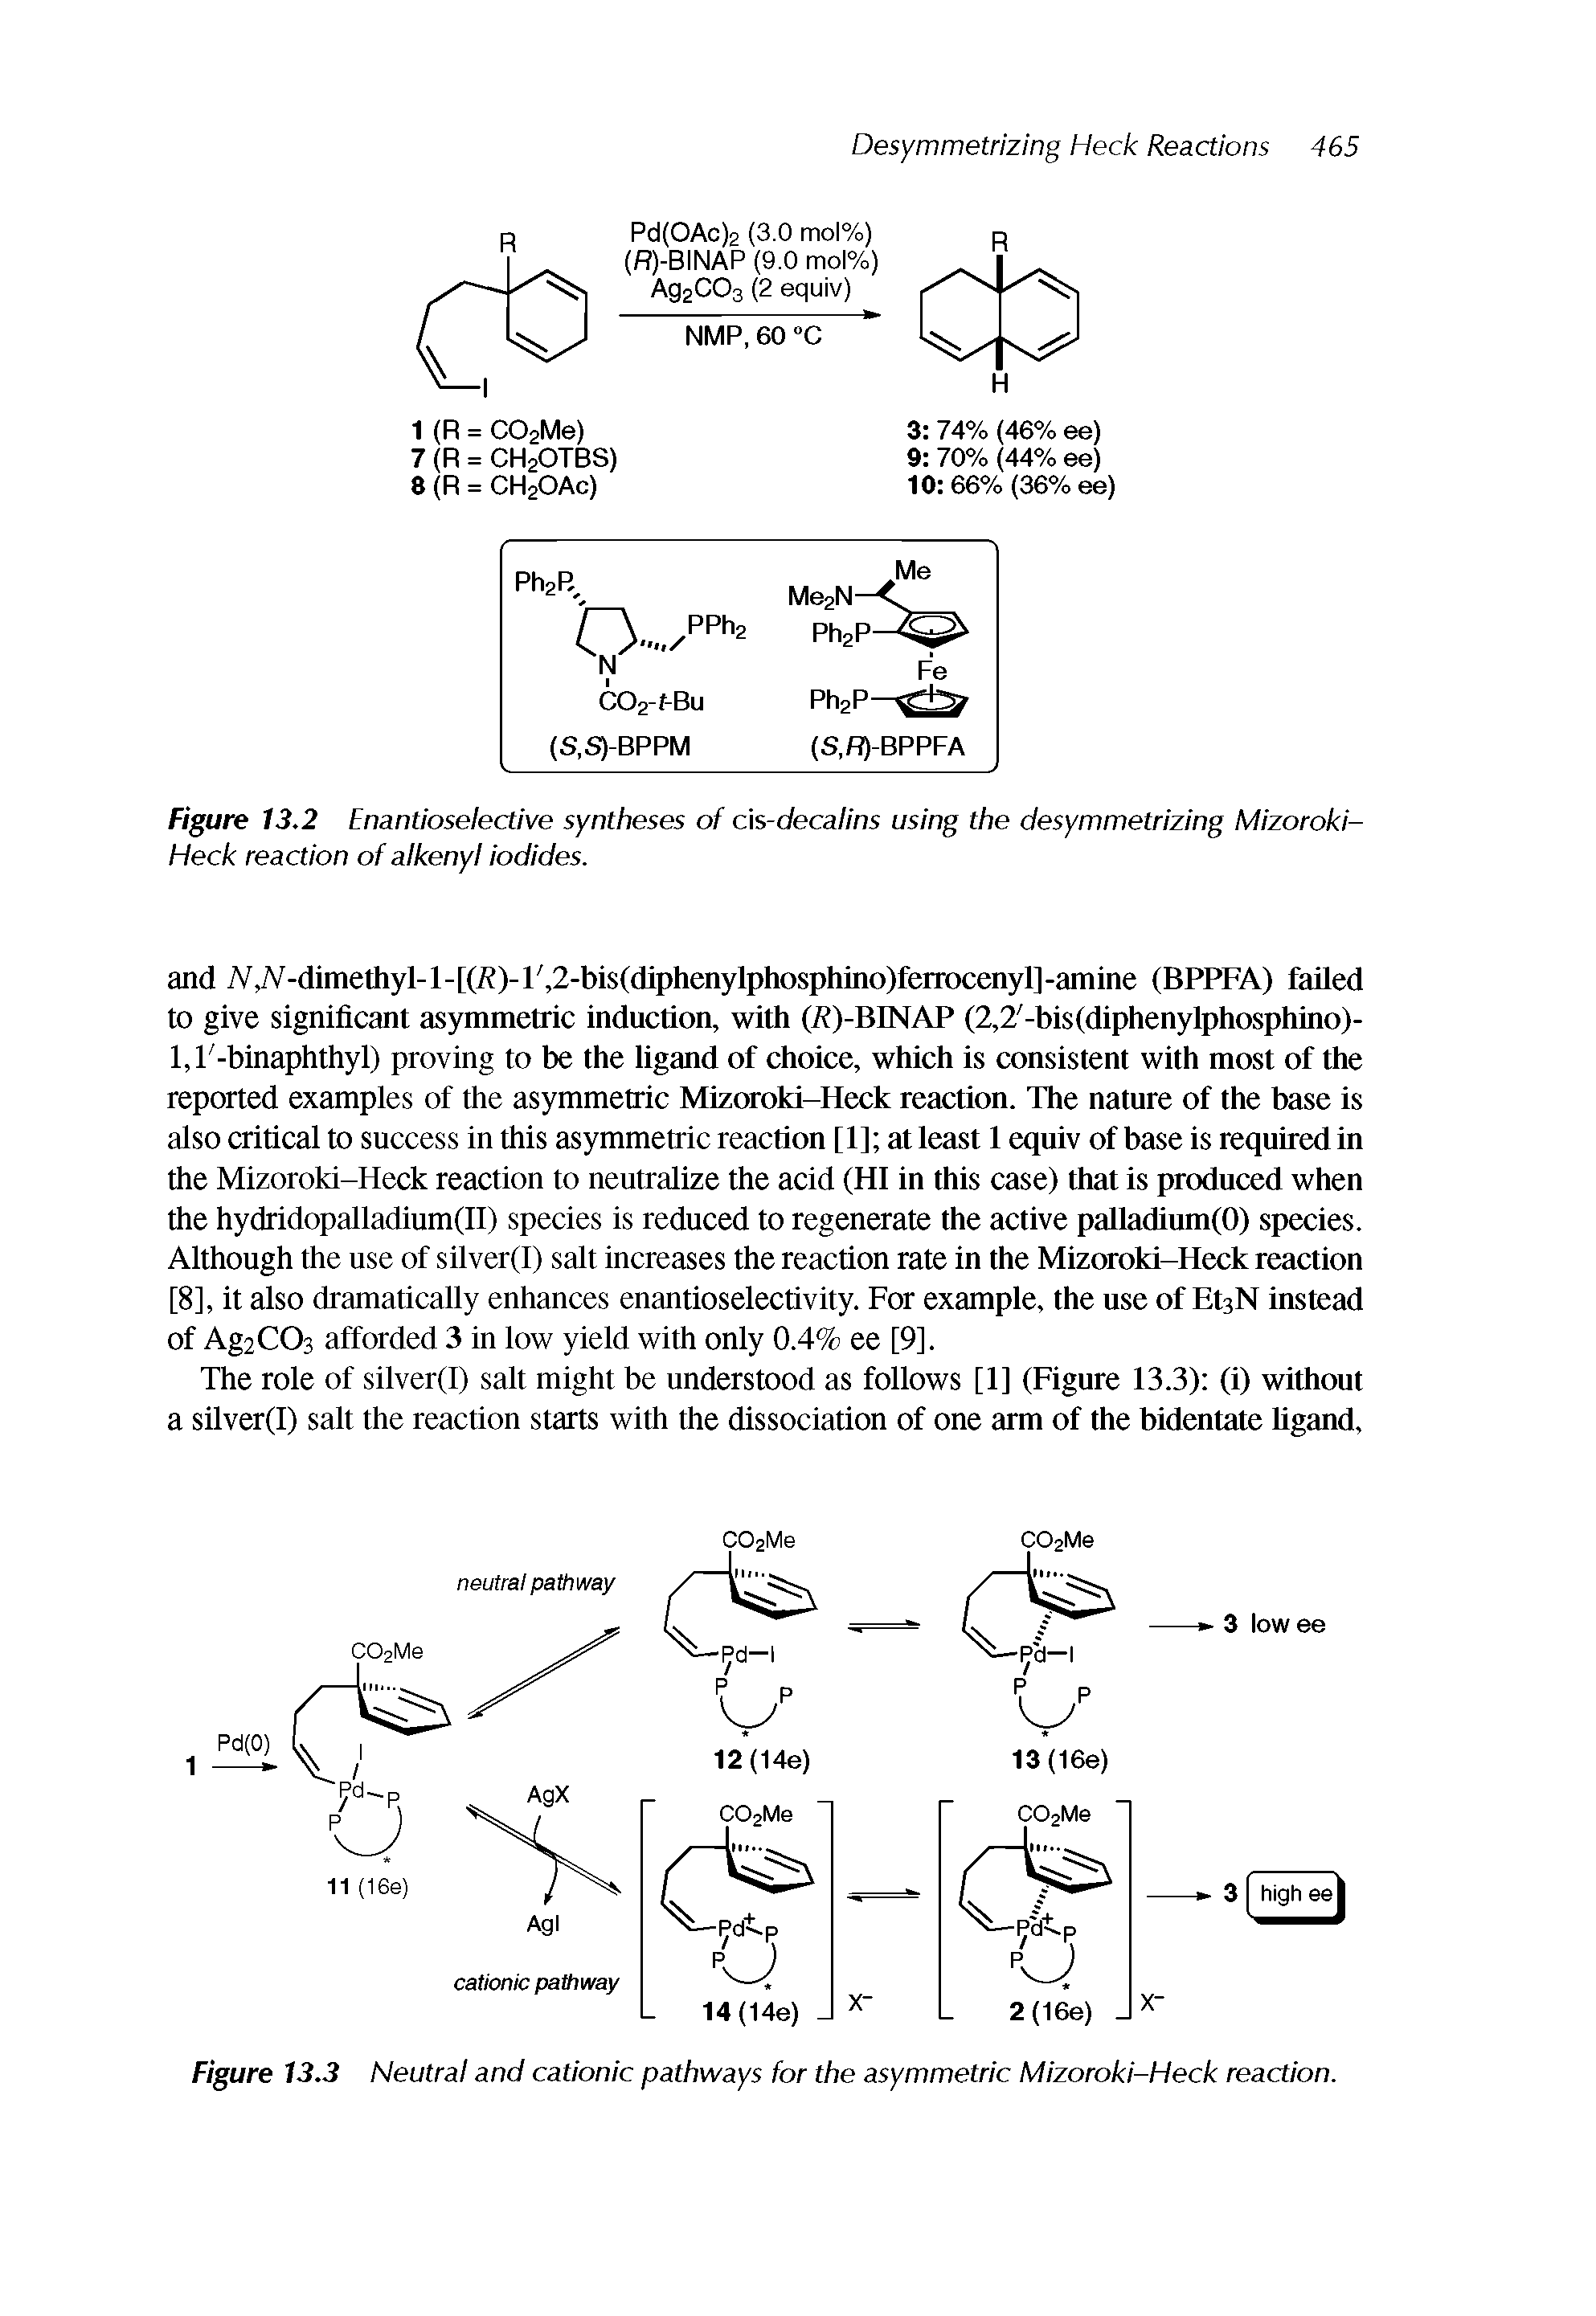 Figure 13.3 Neutral and cationic pathways for the asymmetric Mizoroki-Heck reaction.